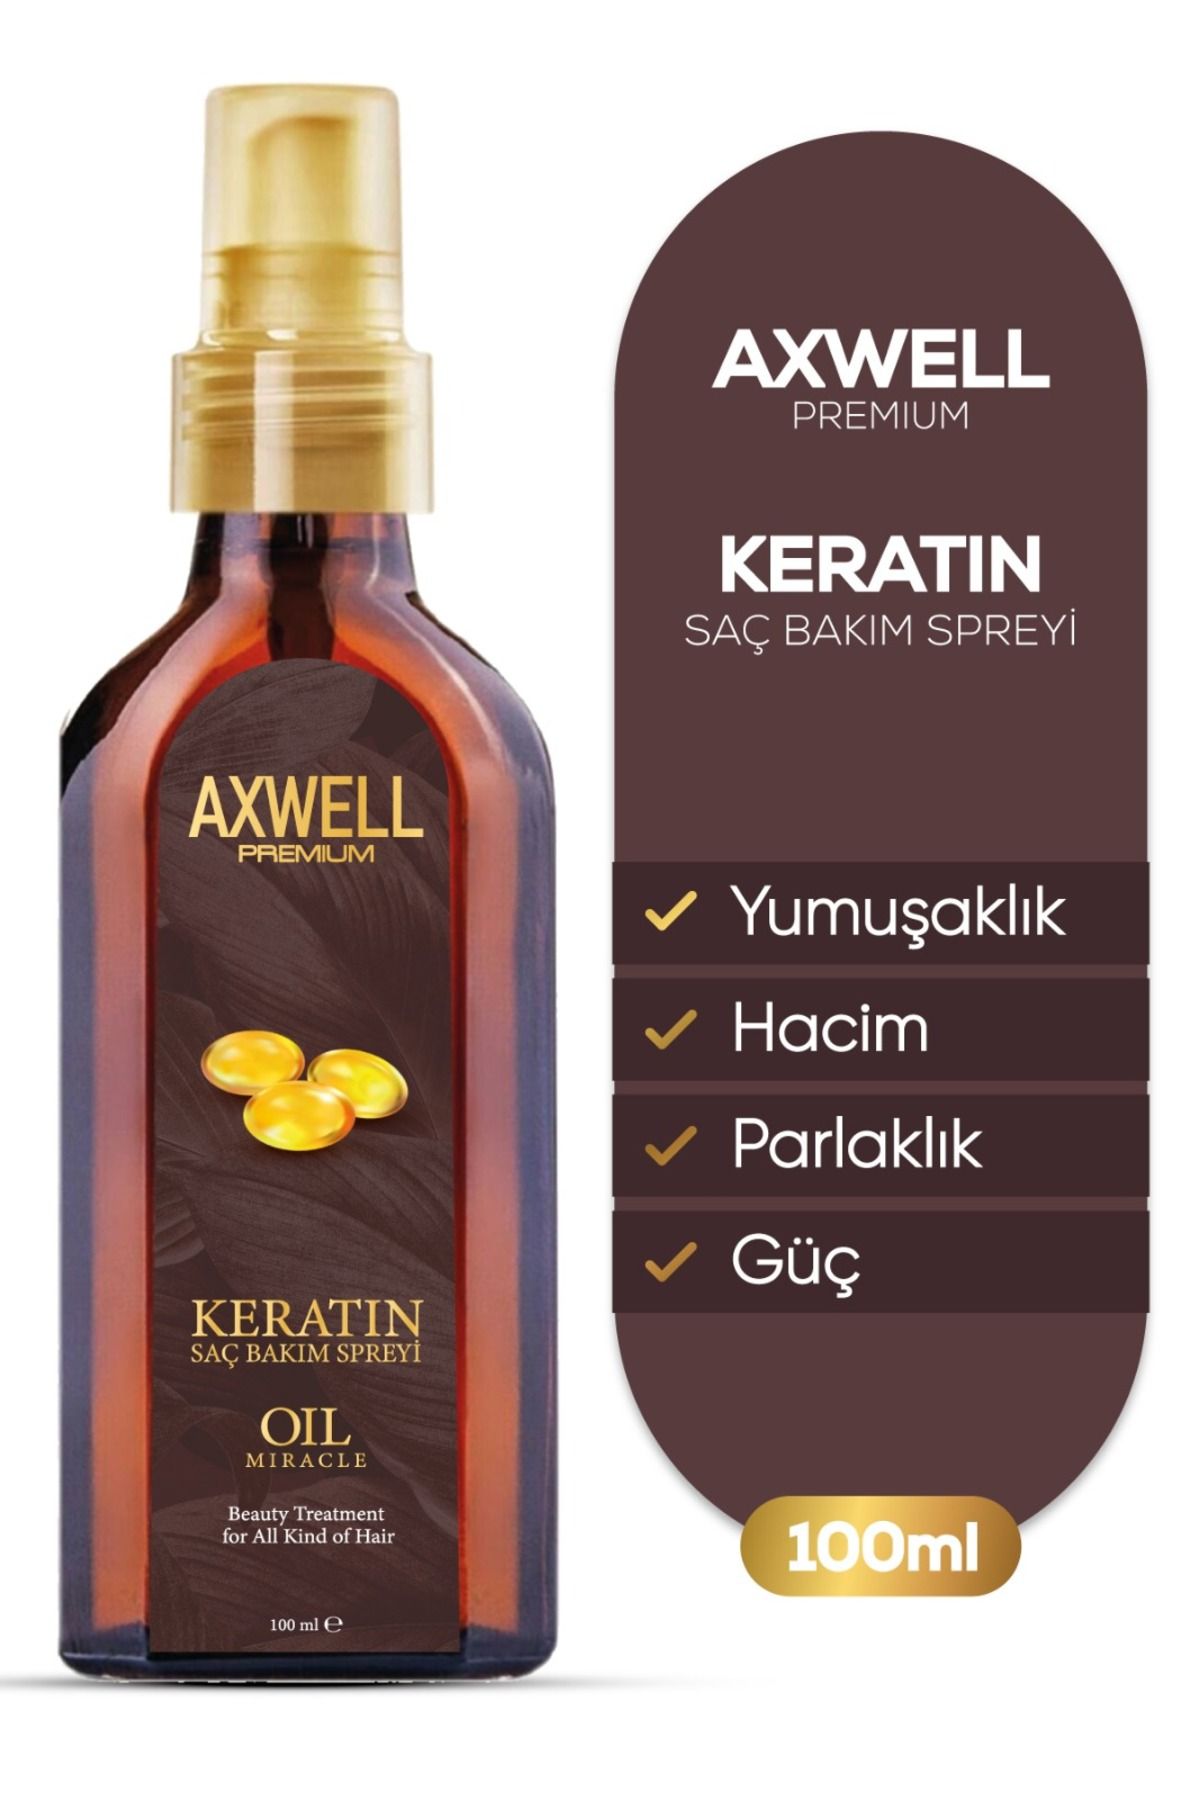 AXWELL PREMIUM Axwell Premium Keratin Saç Bakım Spreyi- 100ml 8680652026355